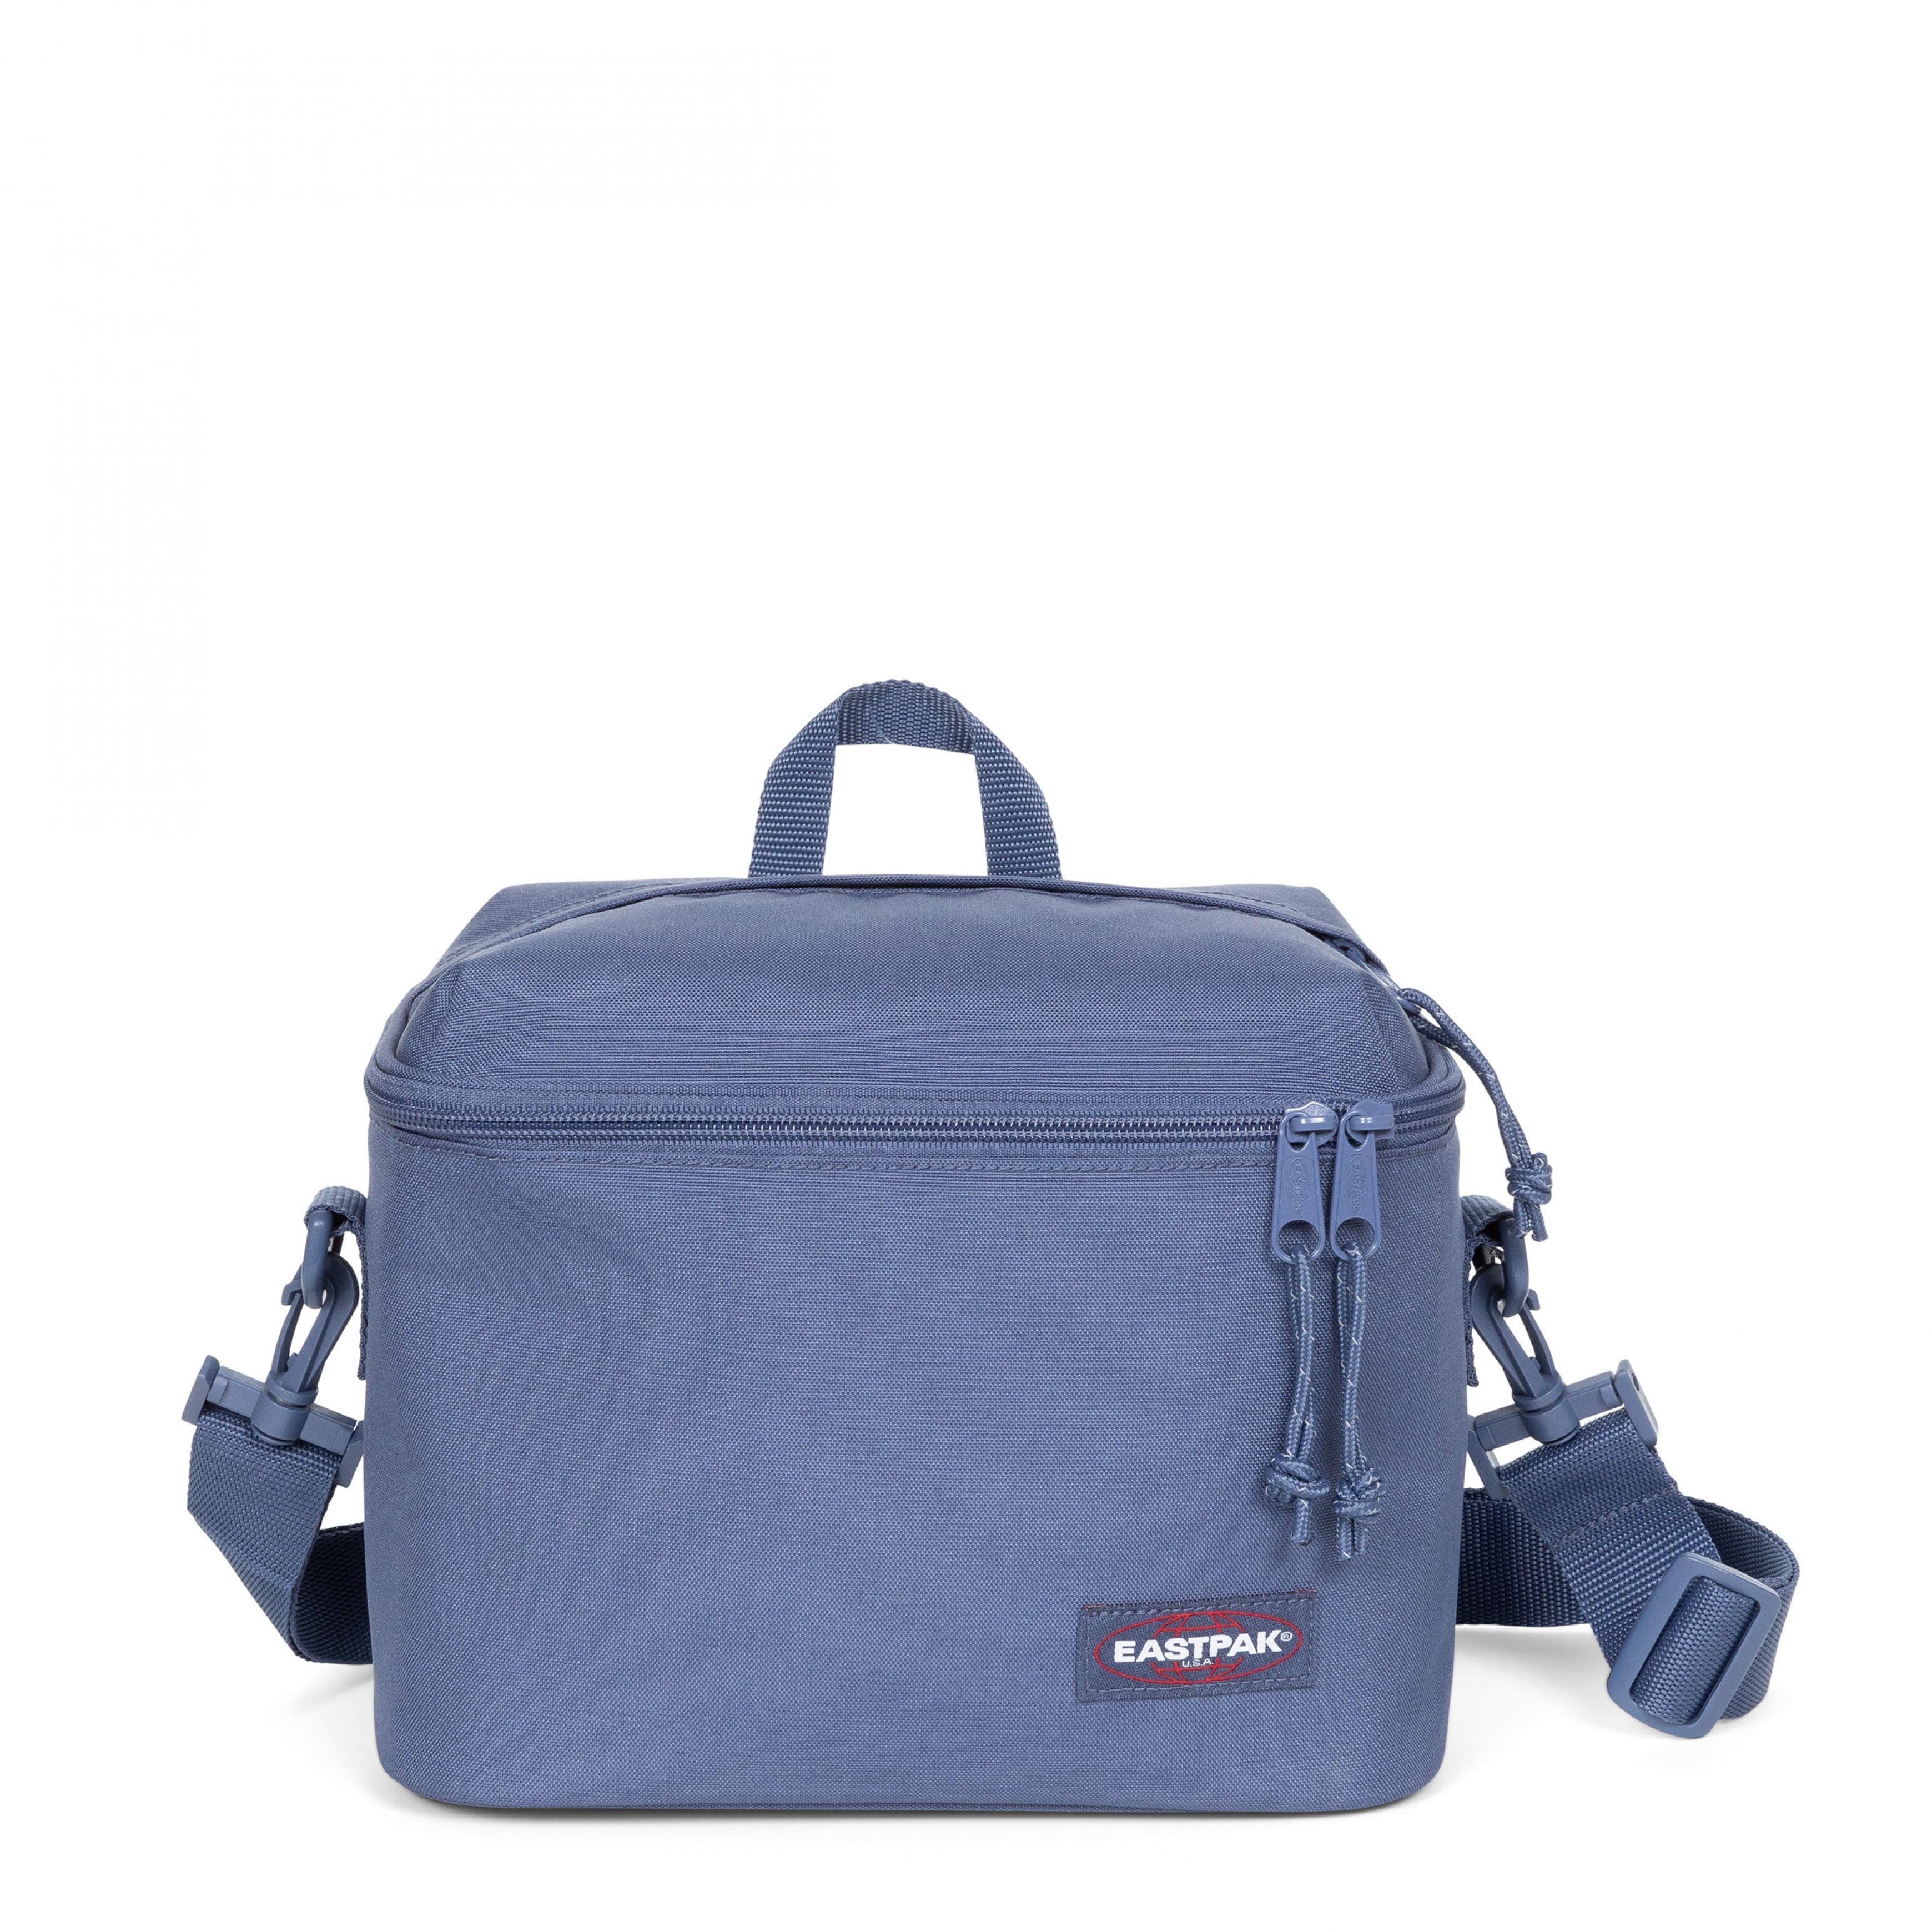 EASTPAK-Double Lunch-Insulated Lunch bag-Powder Pilot-EK0A5BFMU59